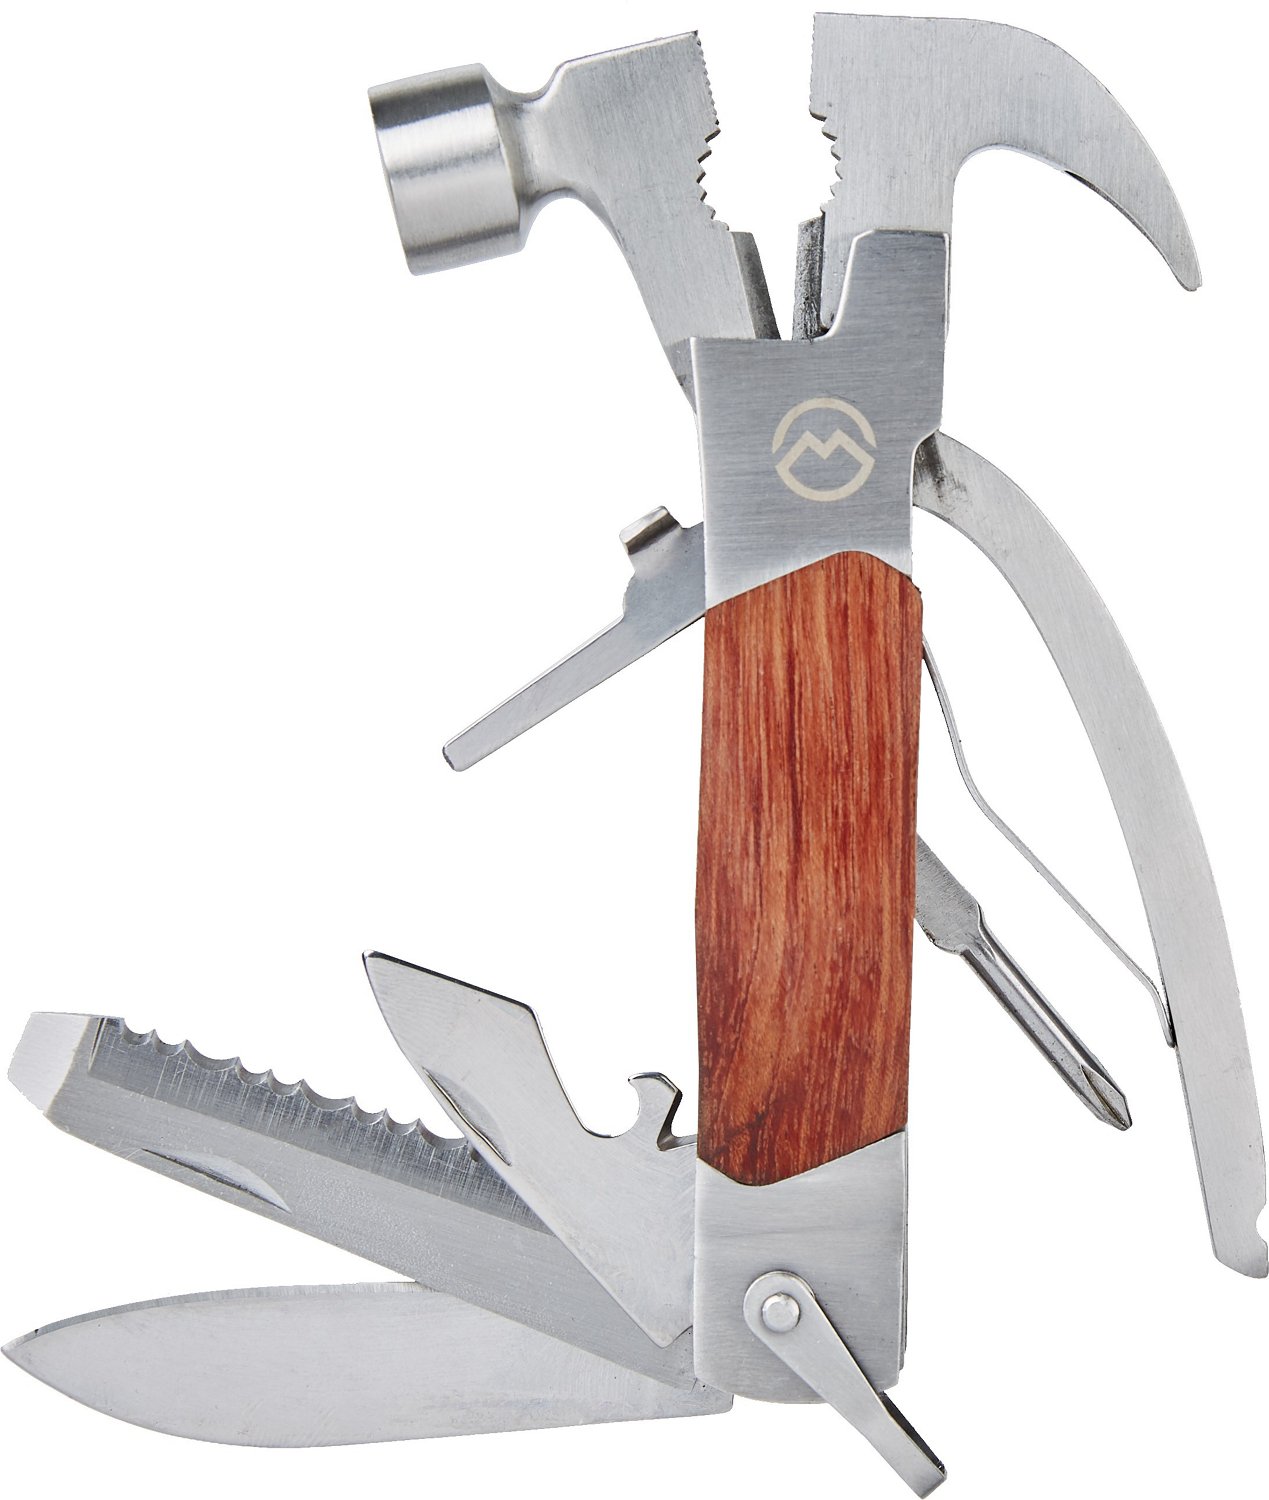 ROXON Hammer Multi Tool  Free Shipping over $49!